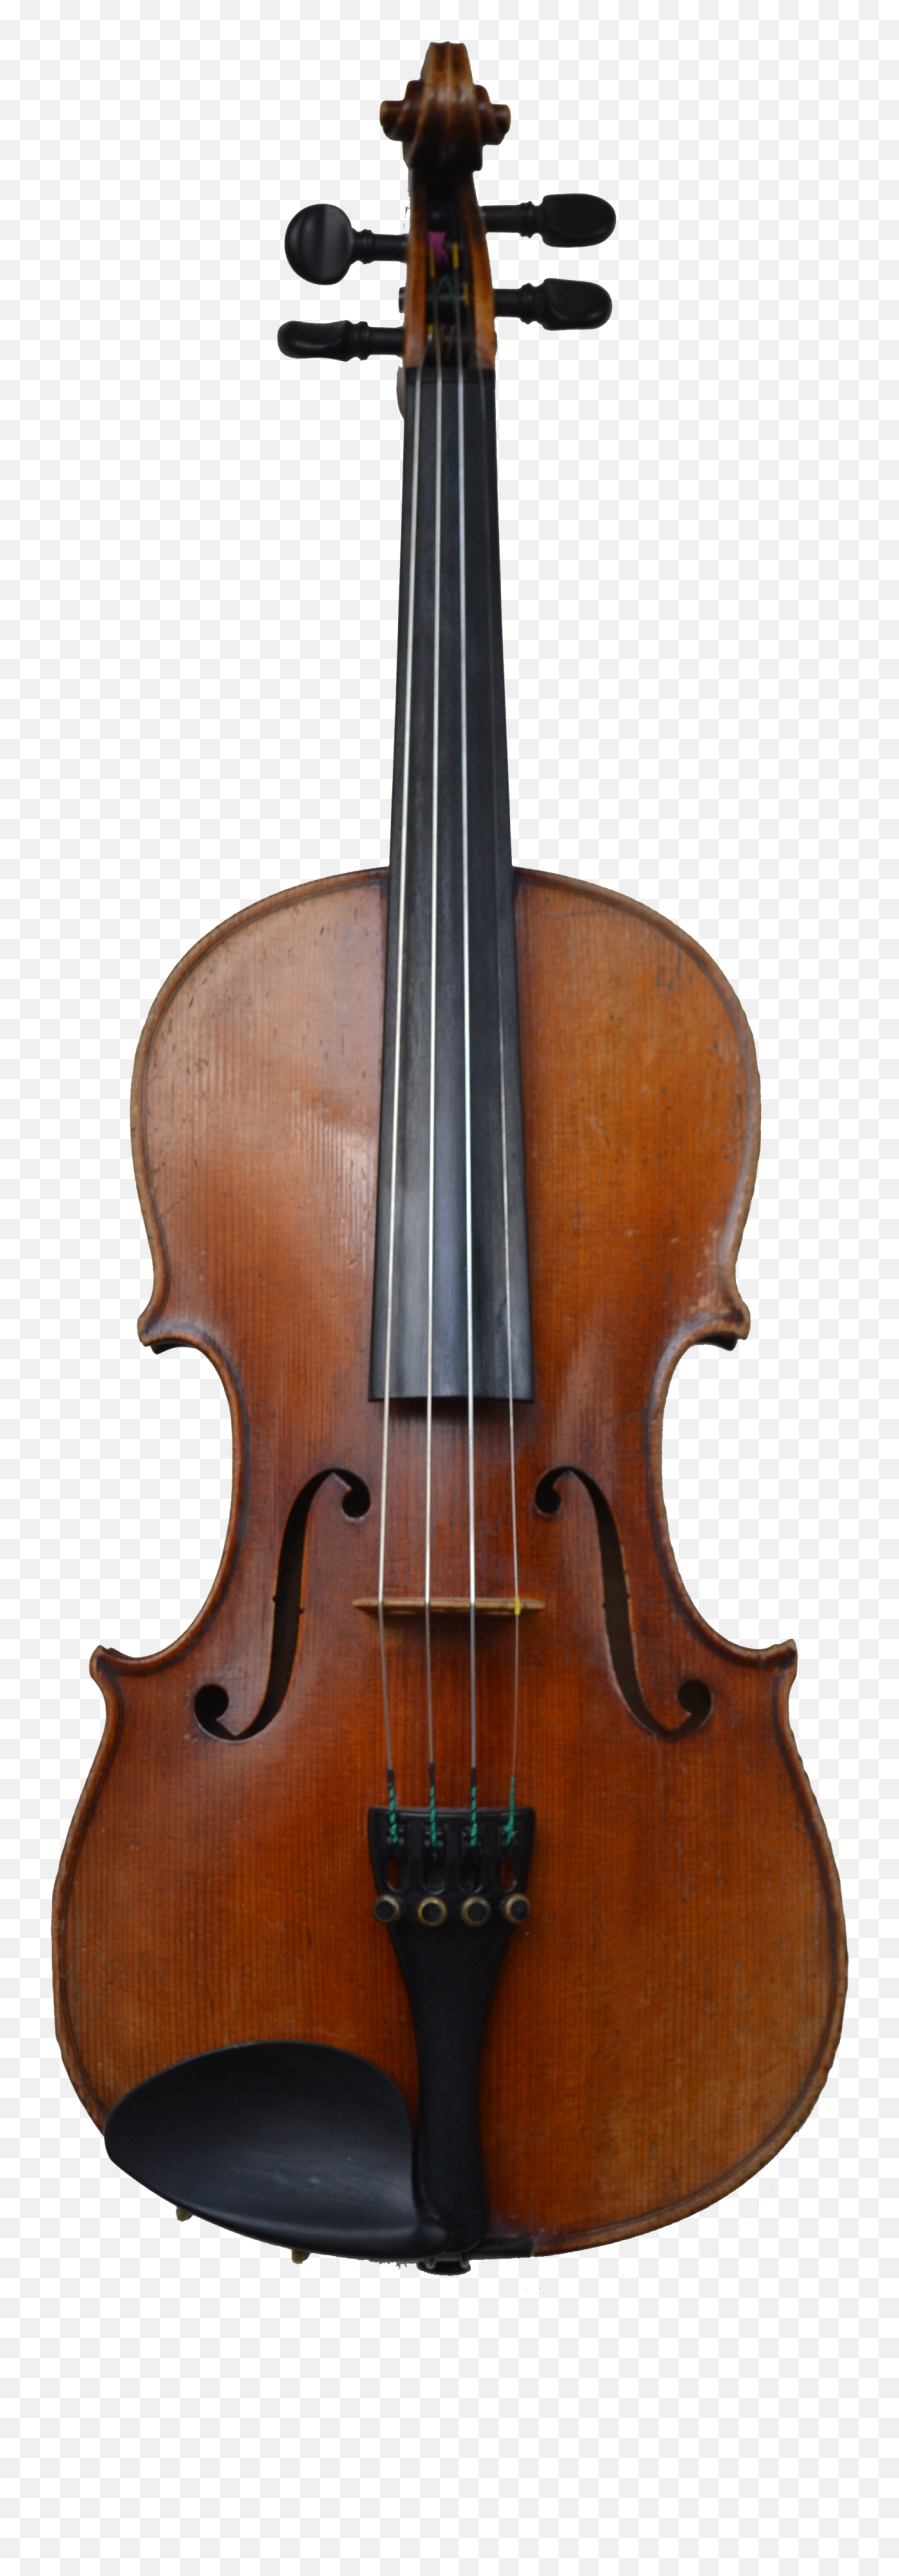 Violin Transparent Png Clipart - Viola Instrument With Name,Violin Transparent Background